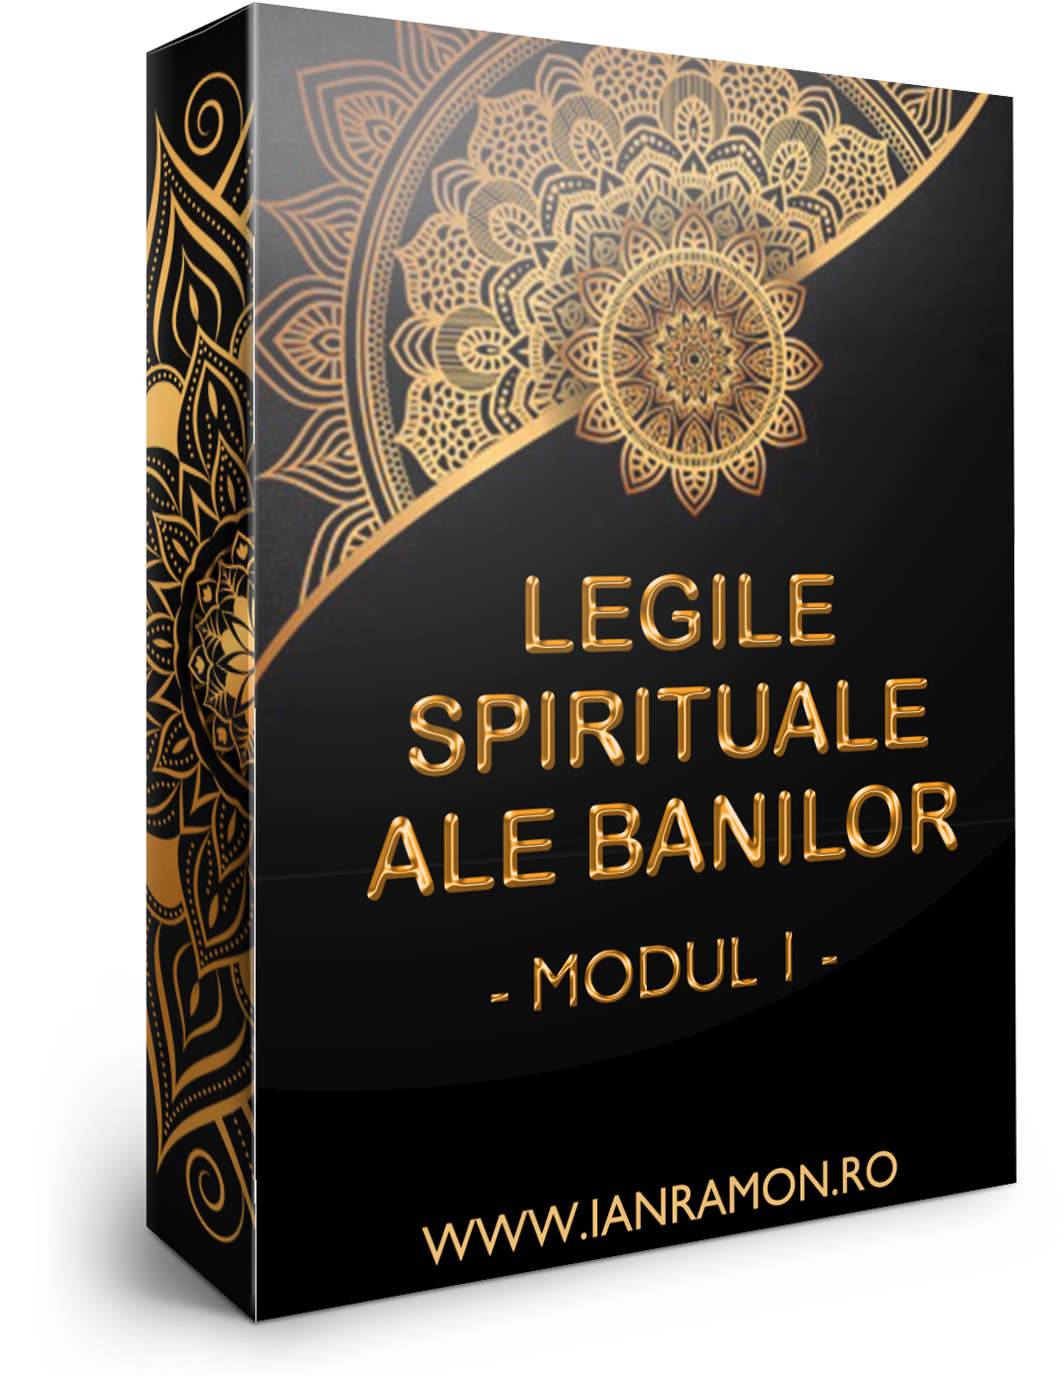 Legile spirituale ale banilor – modul 1